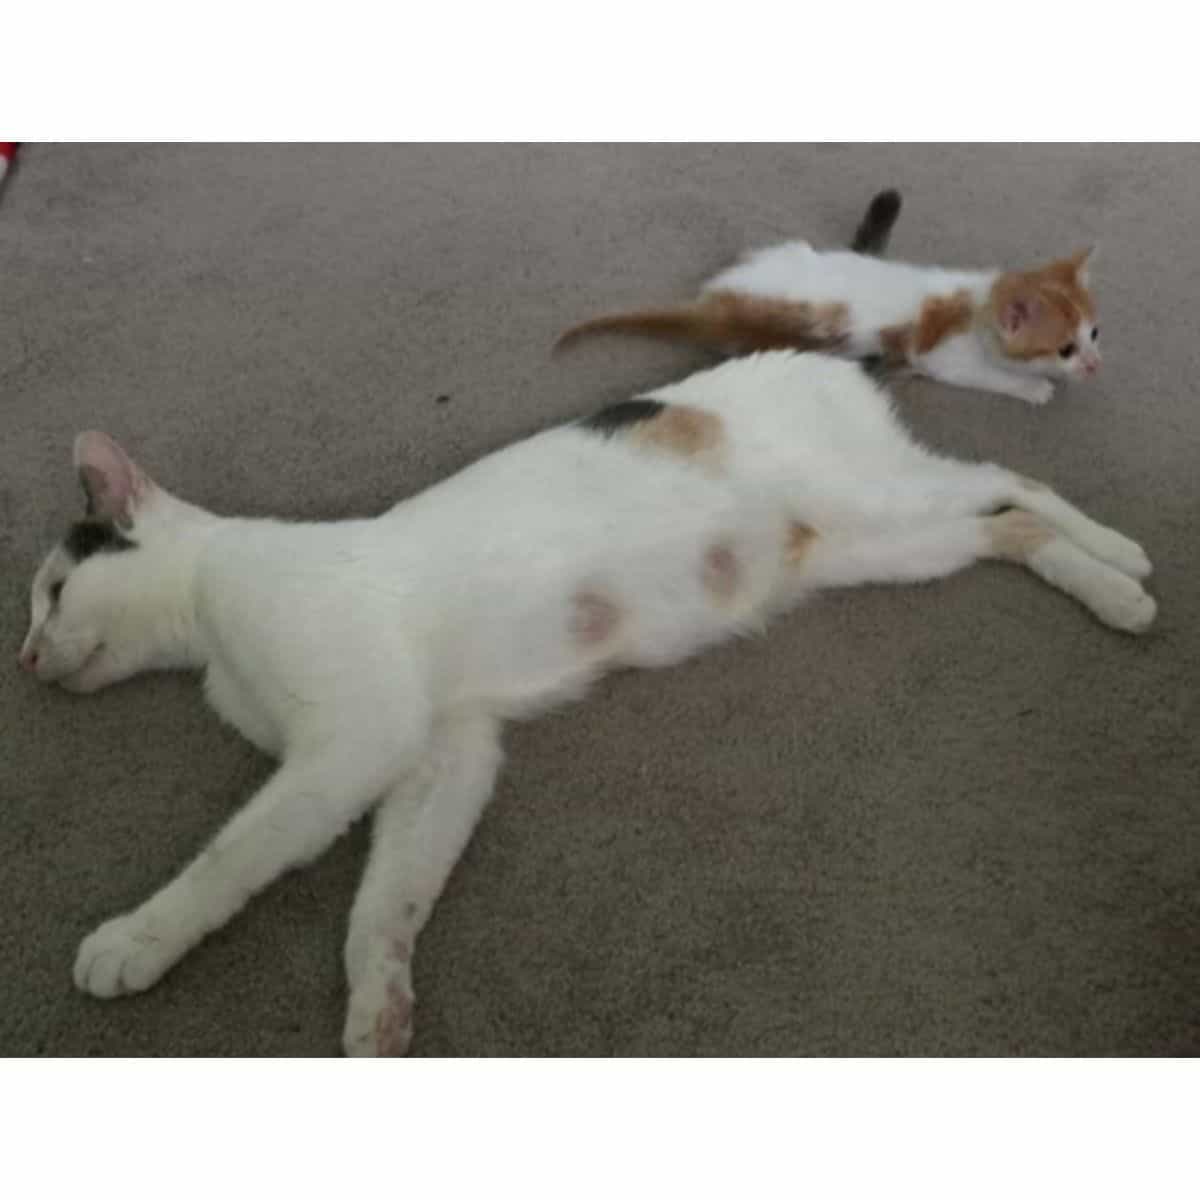 mother cat lying on the floor next to her kitten